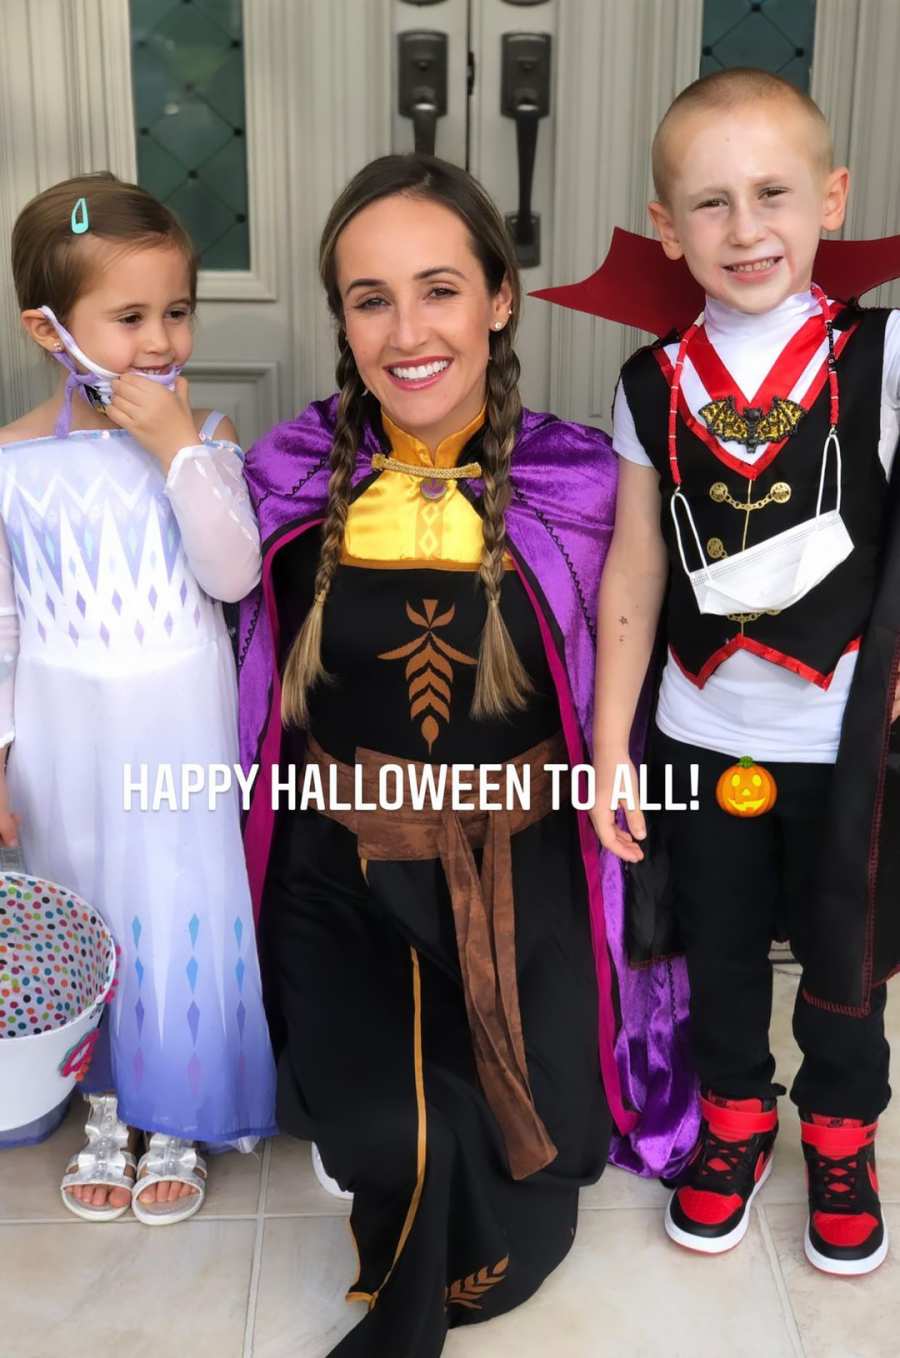 Ashley Hebert and JP Rosenbaum Reunite for Halloween With Kids After Split